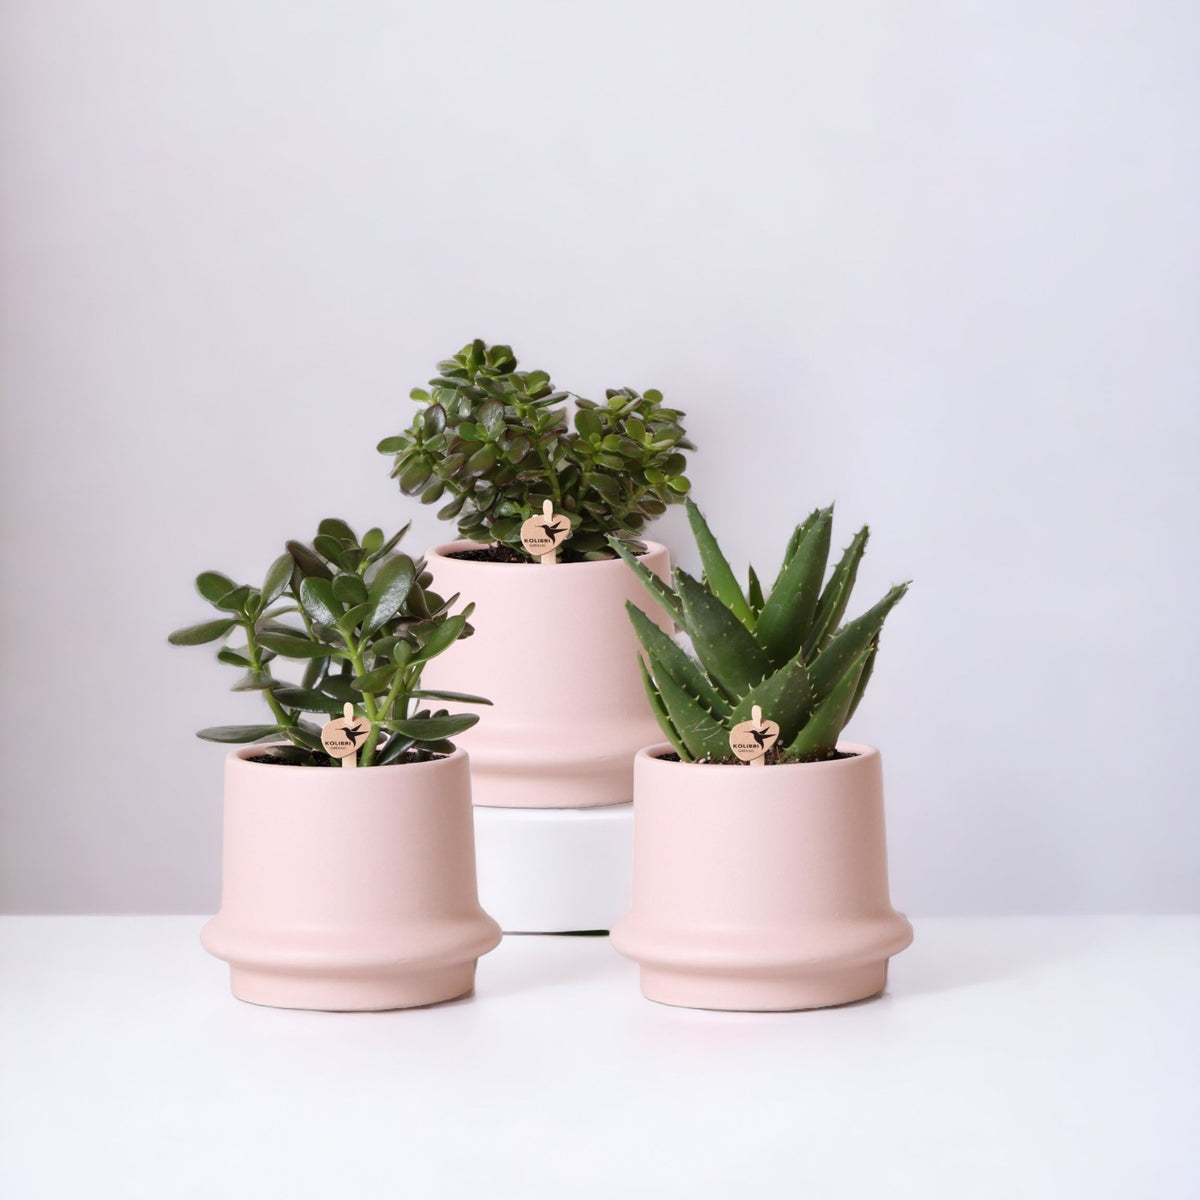 3 einzigartige gemischte – – kaufen Jetzt rosafarbener Keramik La Green Touch Sukkulentenpflanzen aus